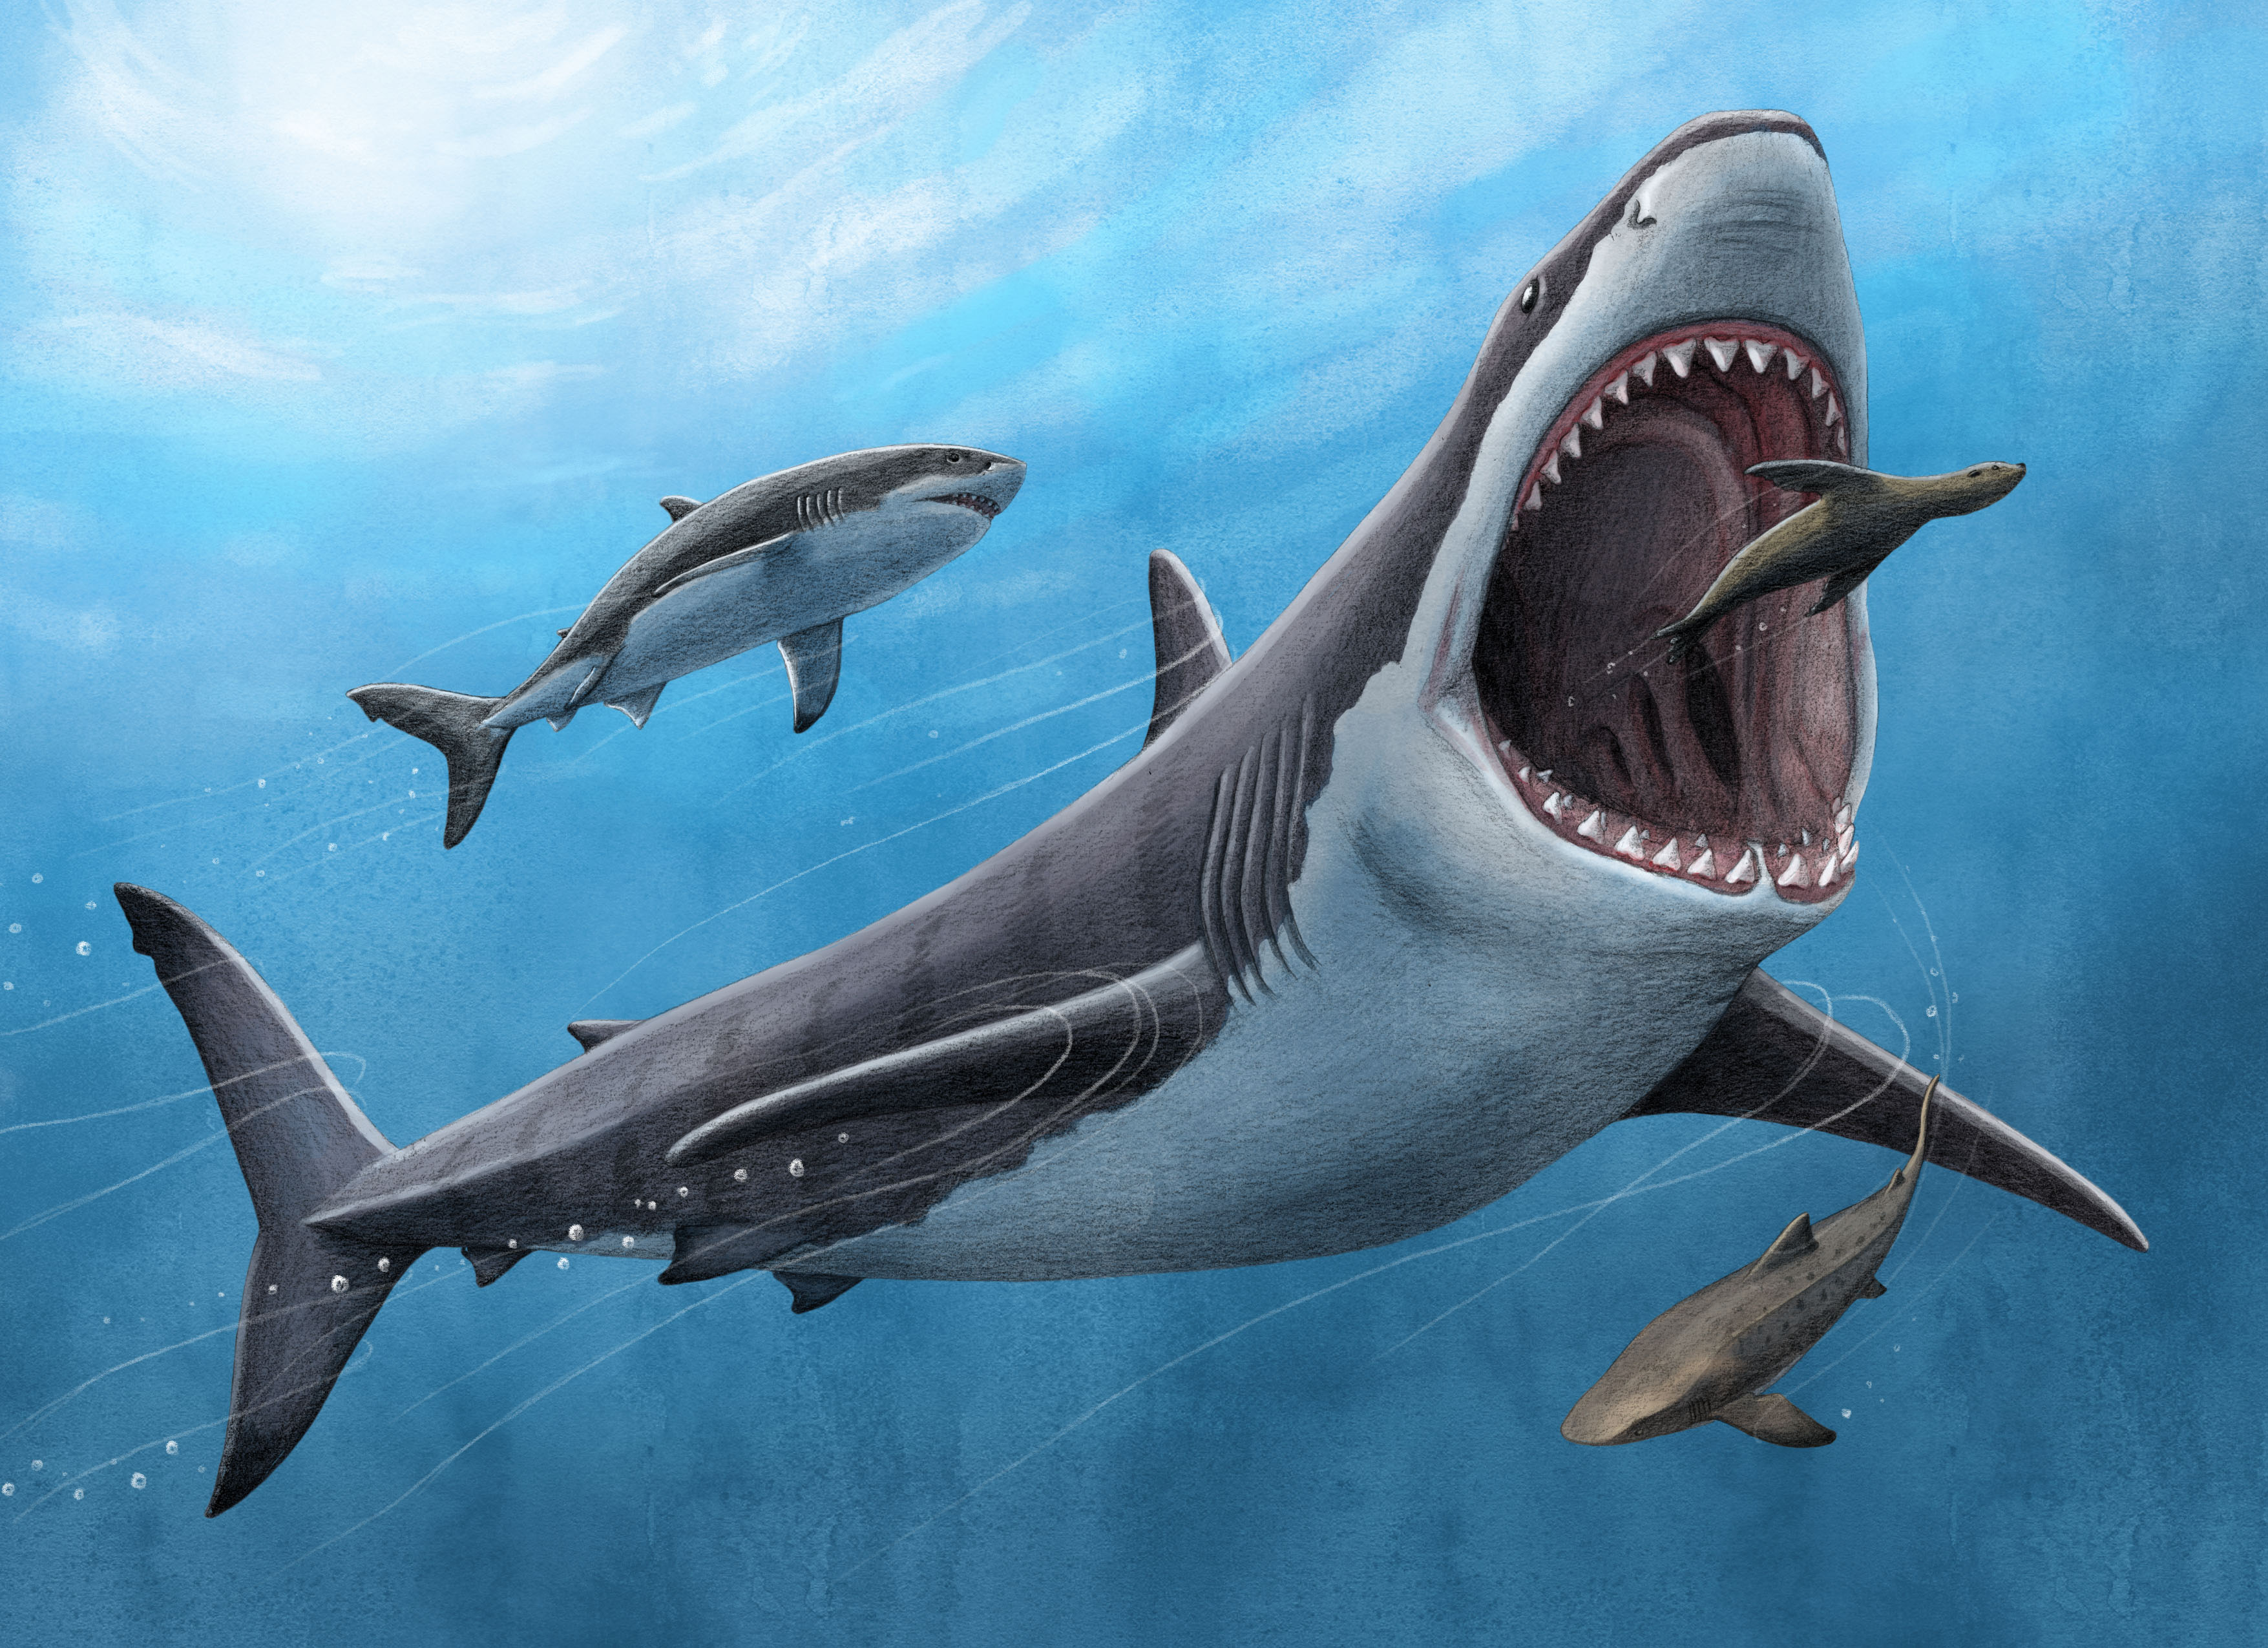 Megalodon shark eating large prey